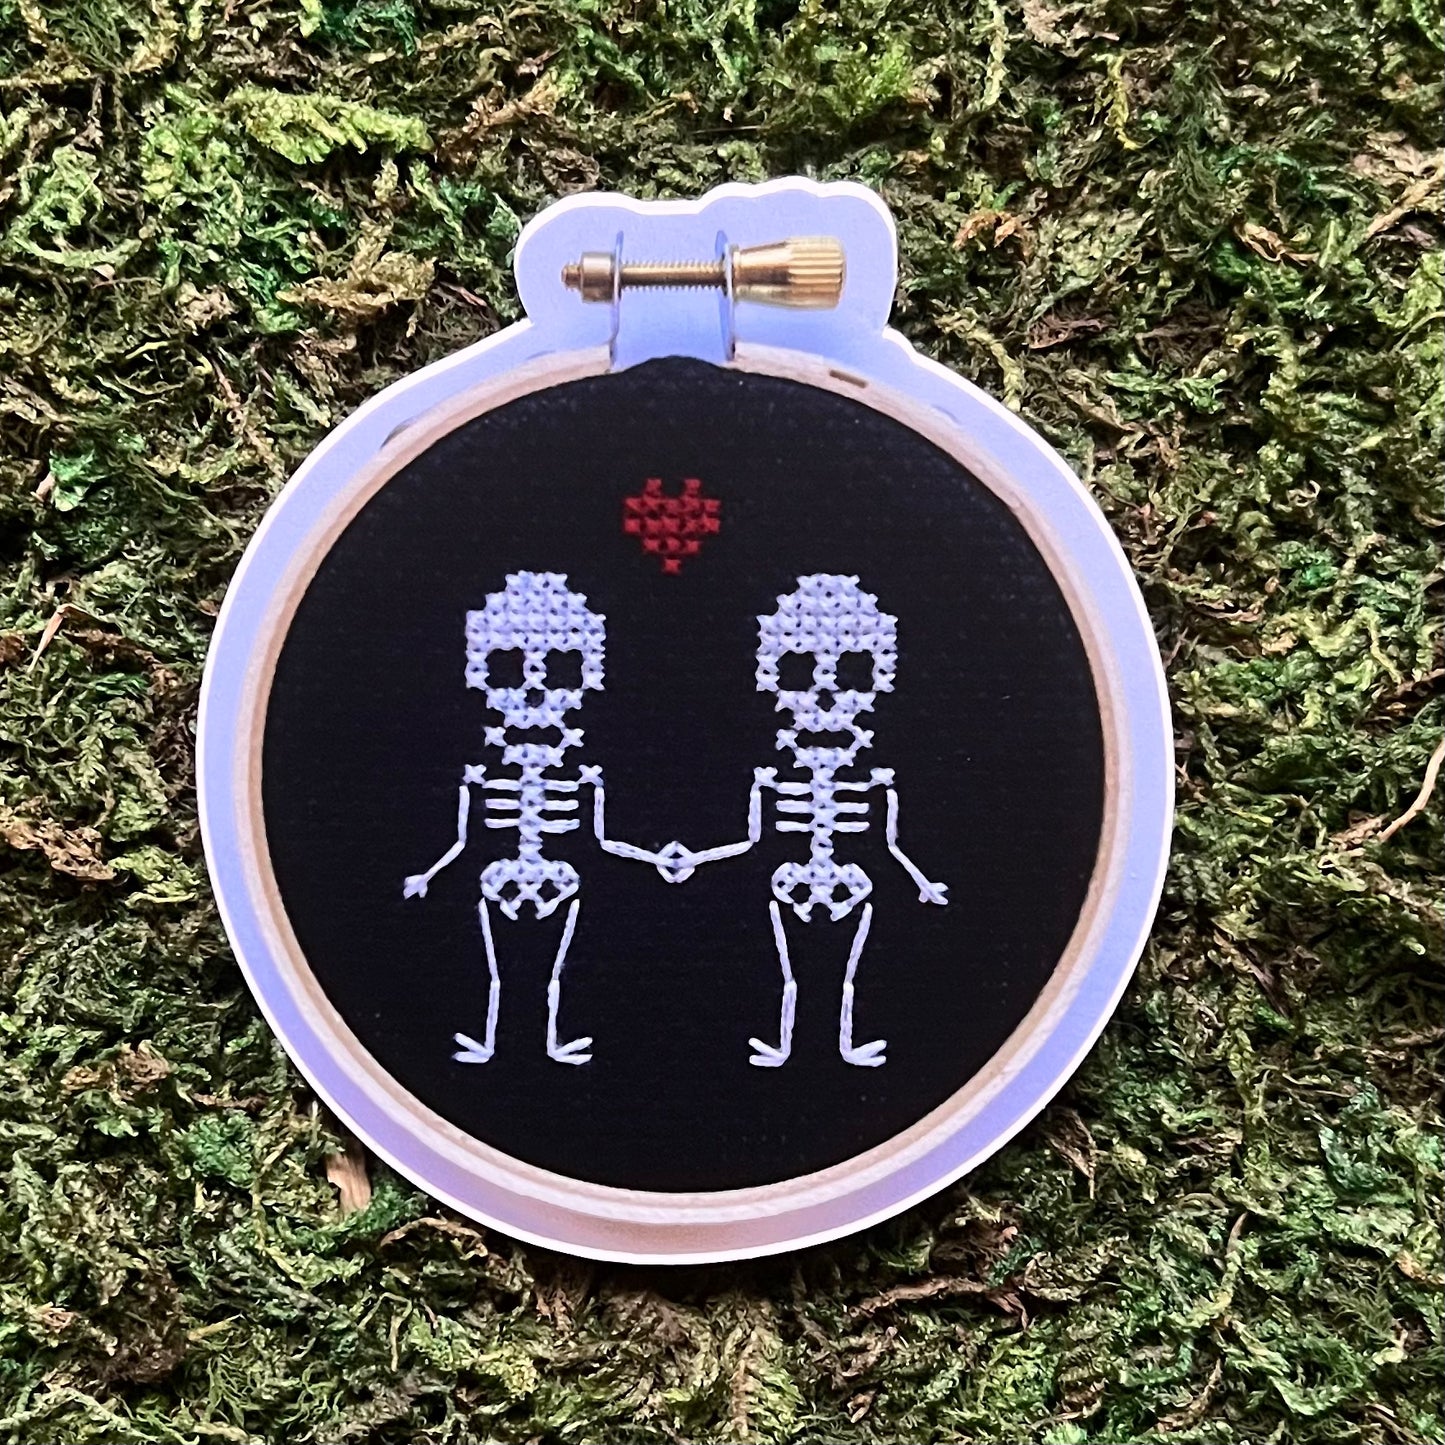 Skeletons with Heart Cross Stitch Inspired Vinyl Sticker